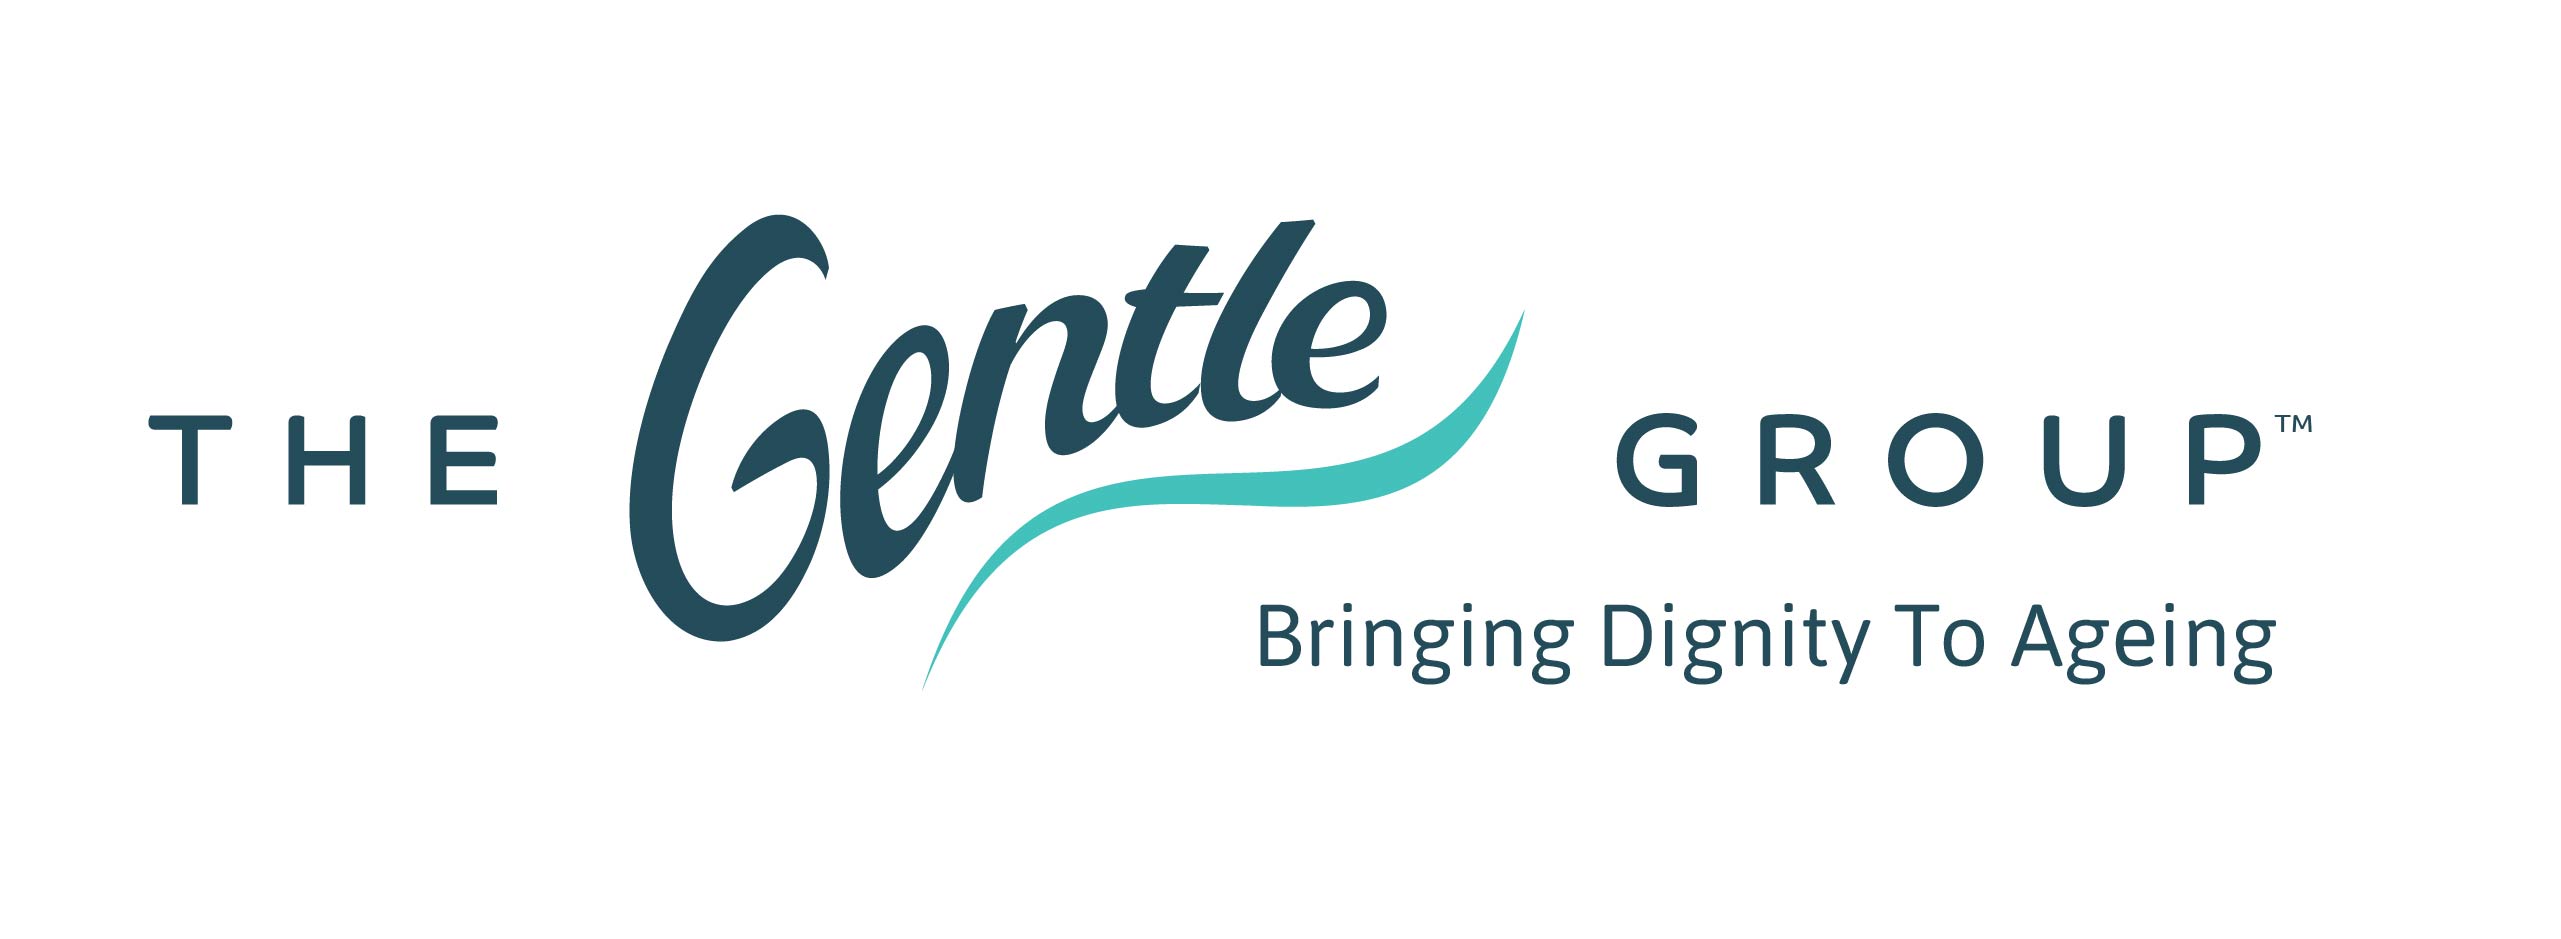 The Gentle Group Pte. Ltd. company logo